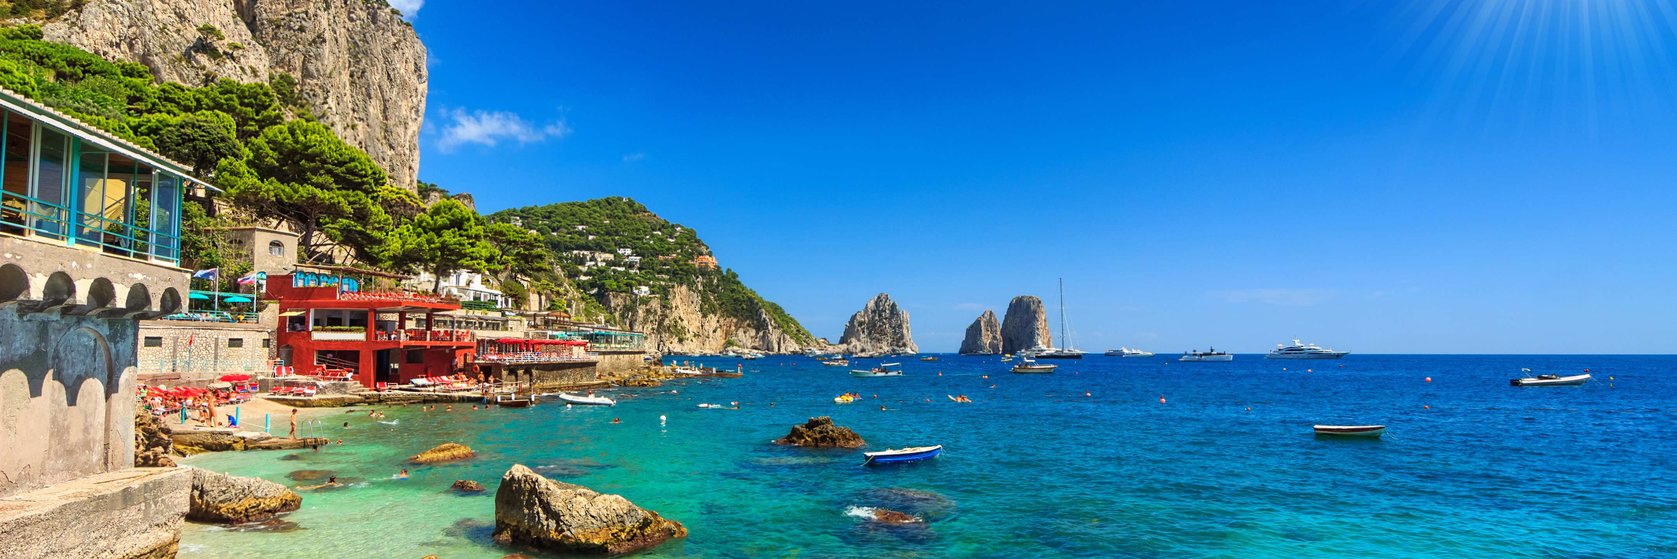 Hotely Capri